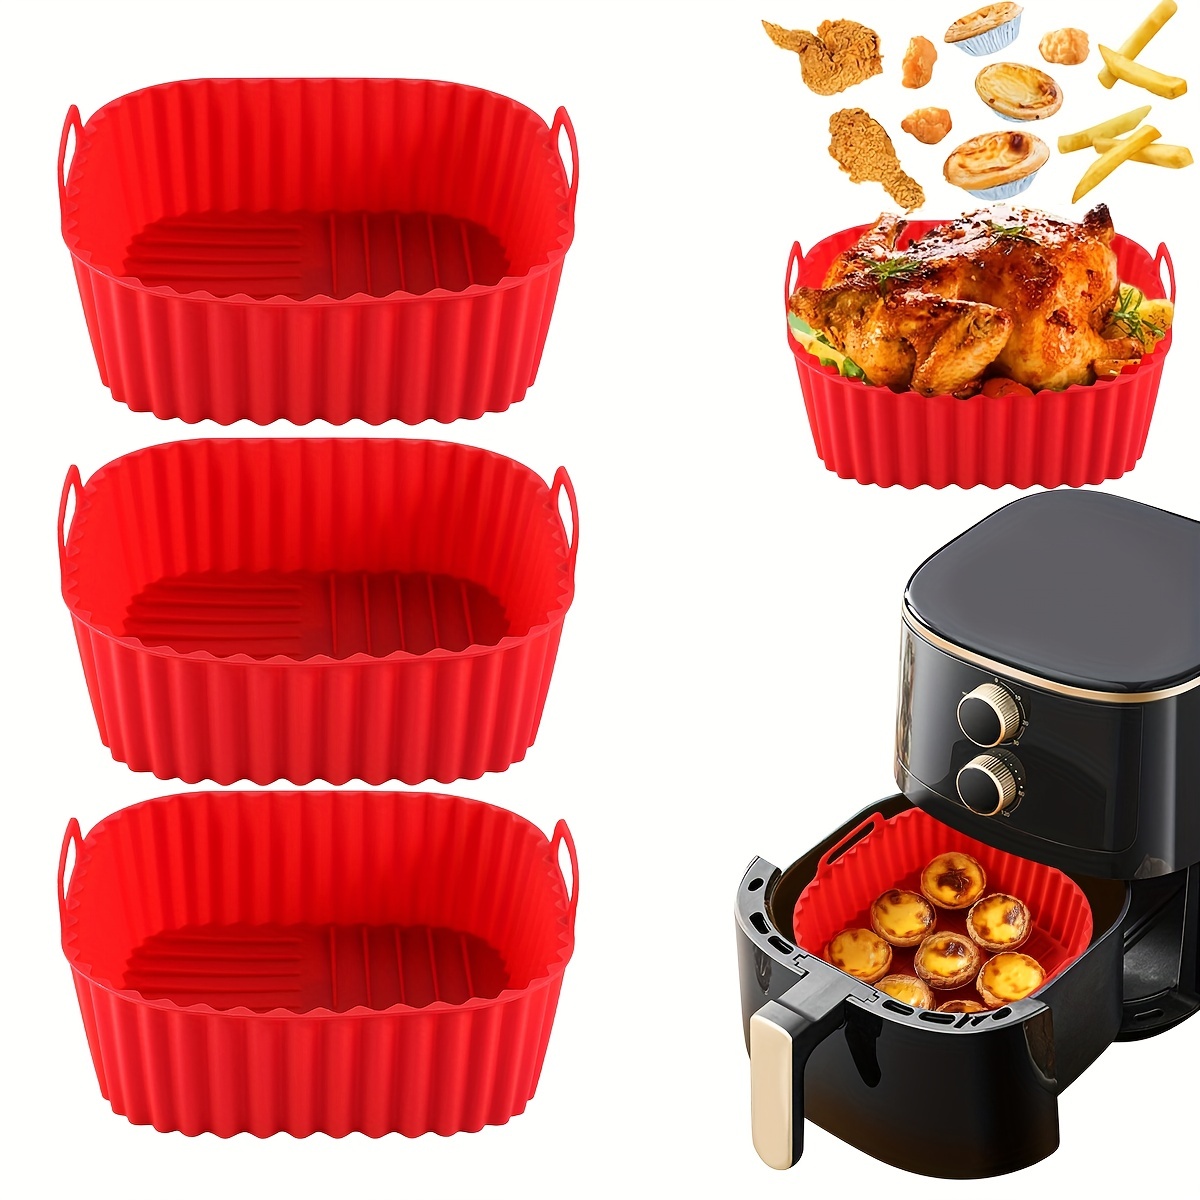 Hot Air Fryer Accessories 12-Piece Set, BPA-Free Non-Stick Square